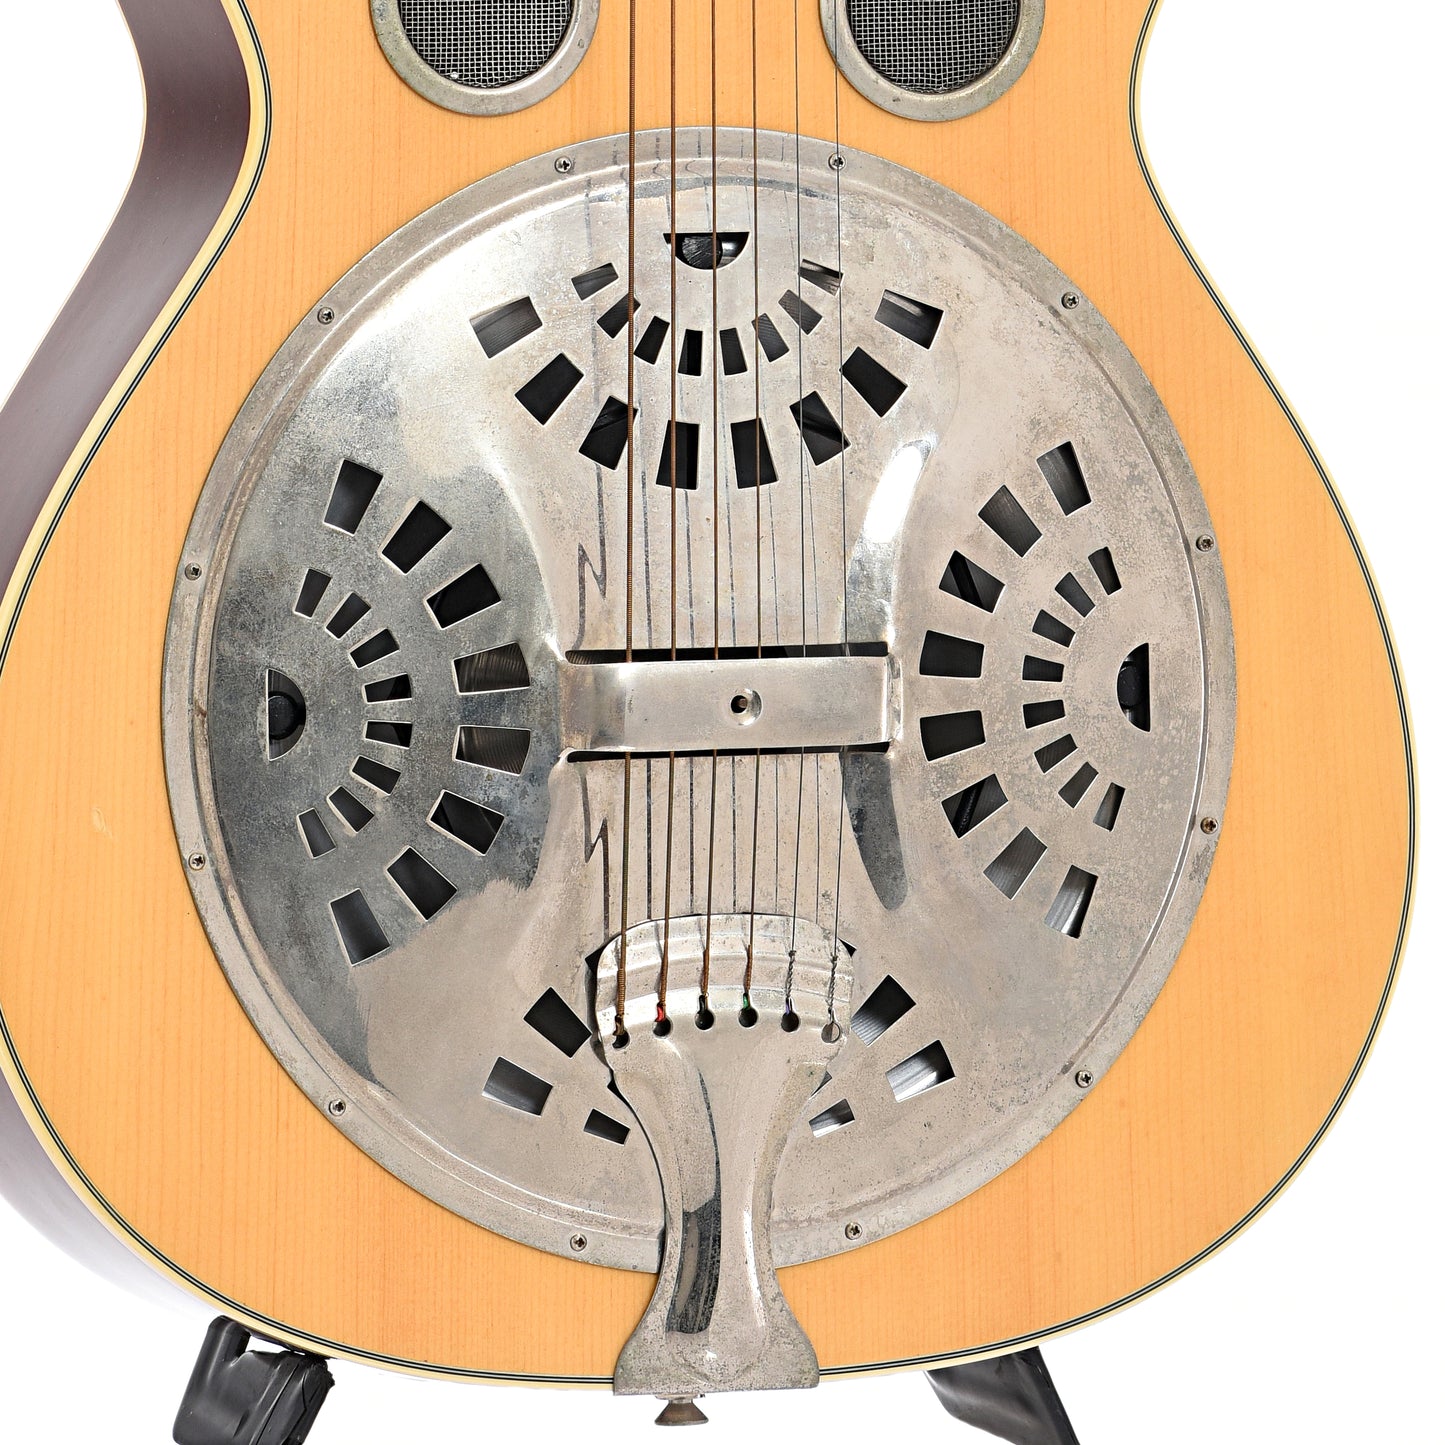 Resonator of Regal RD-45S Squareneck Resonator Guitar (1990's)